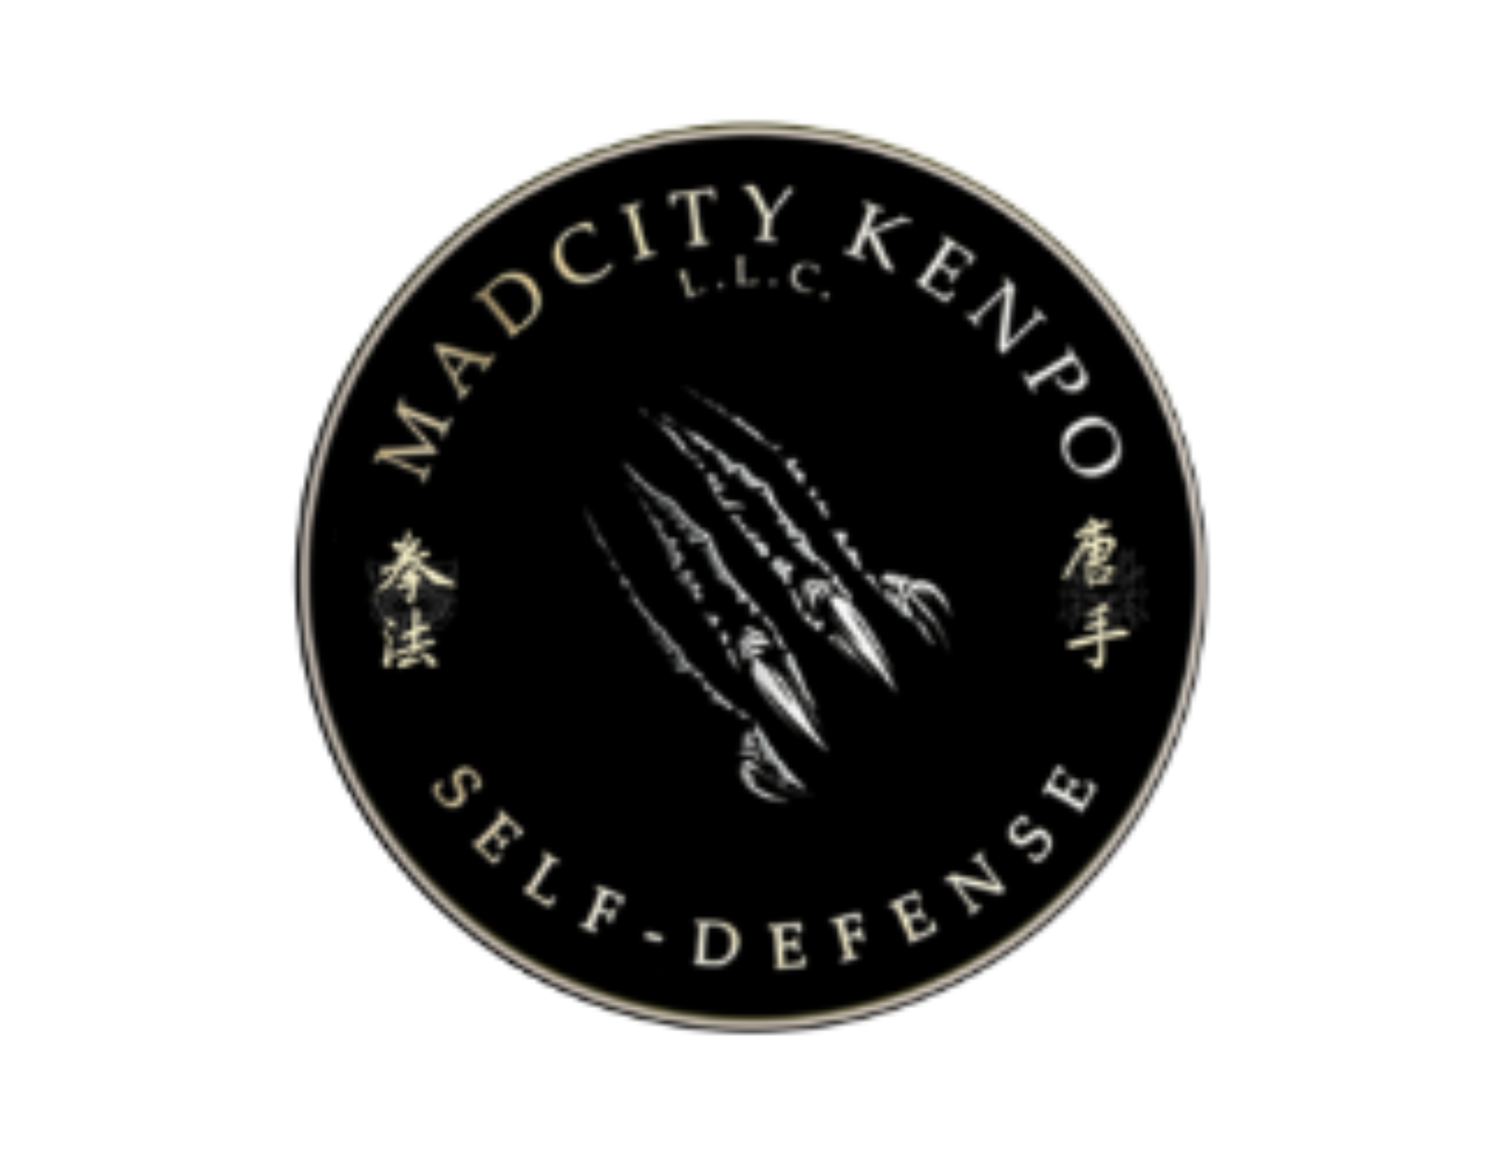 MadCity Self-Defense 